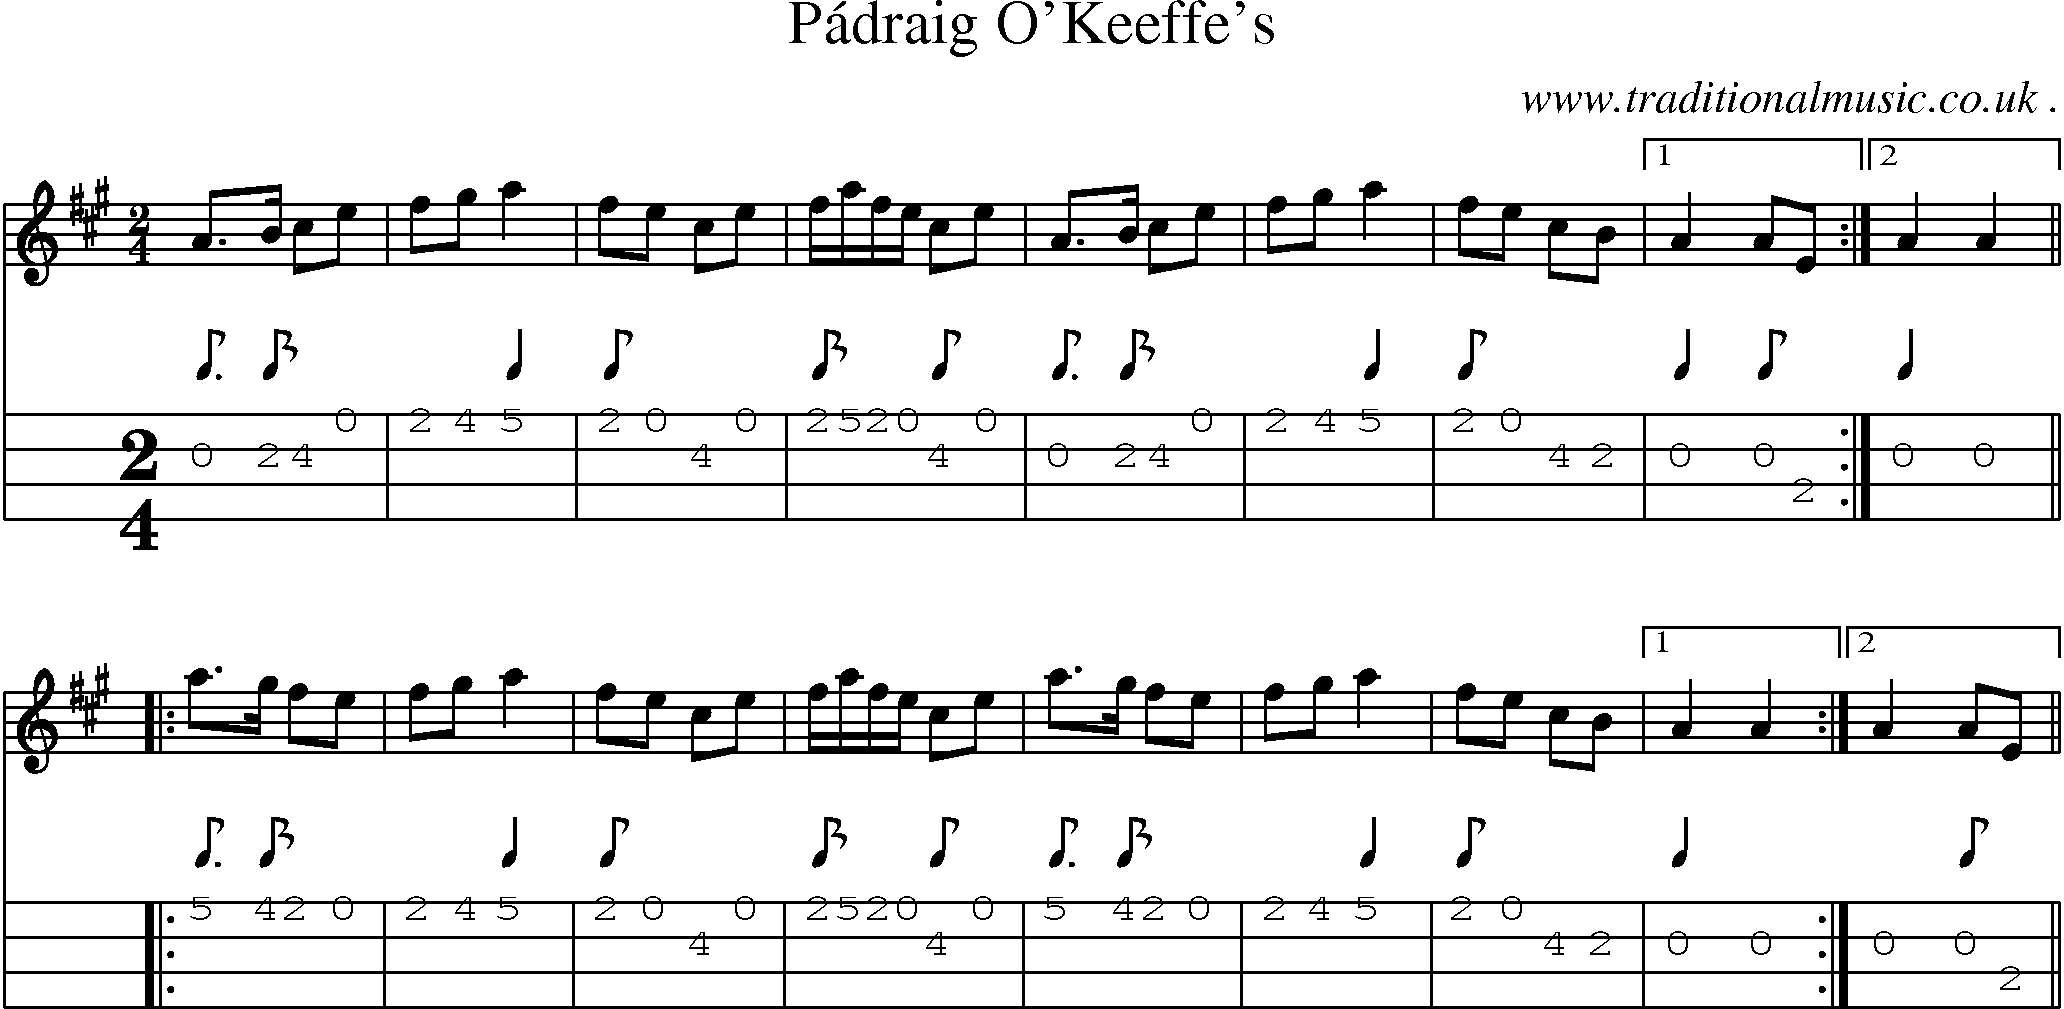 Sheet-Music and Mandolin Tabs for Padraig Okeeffe